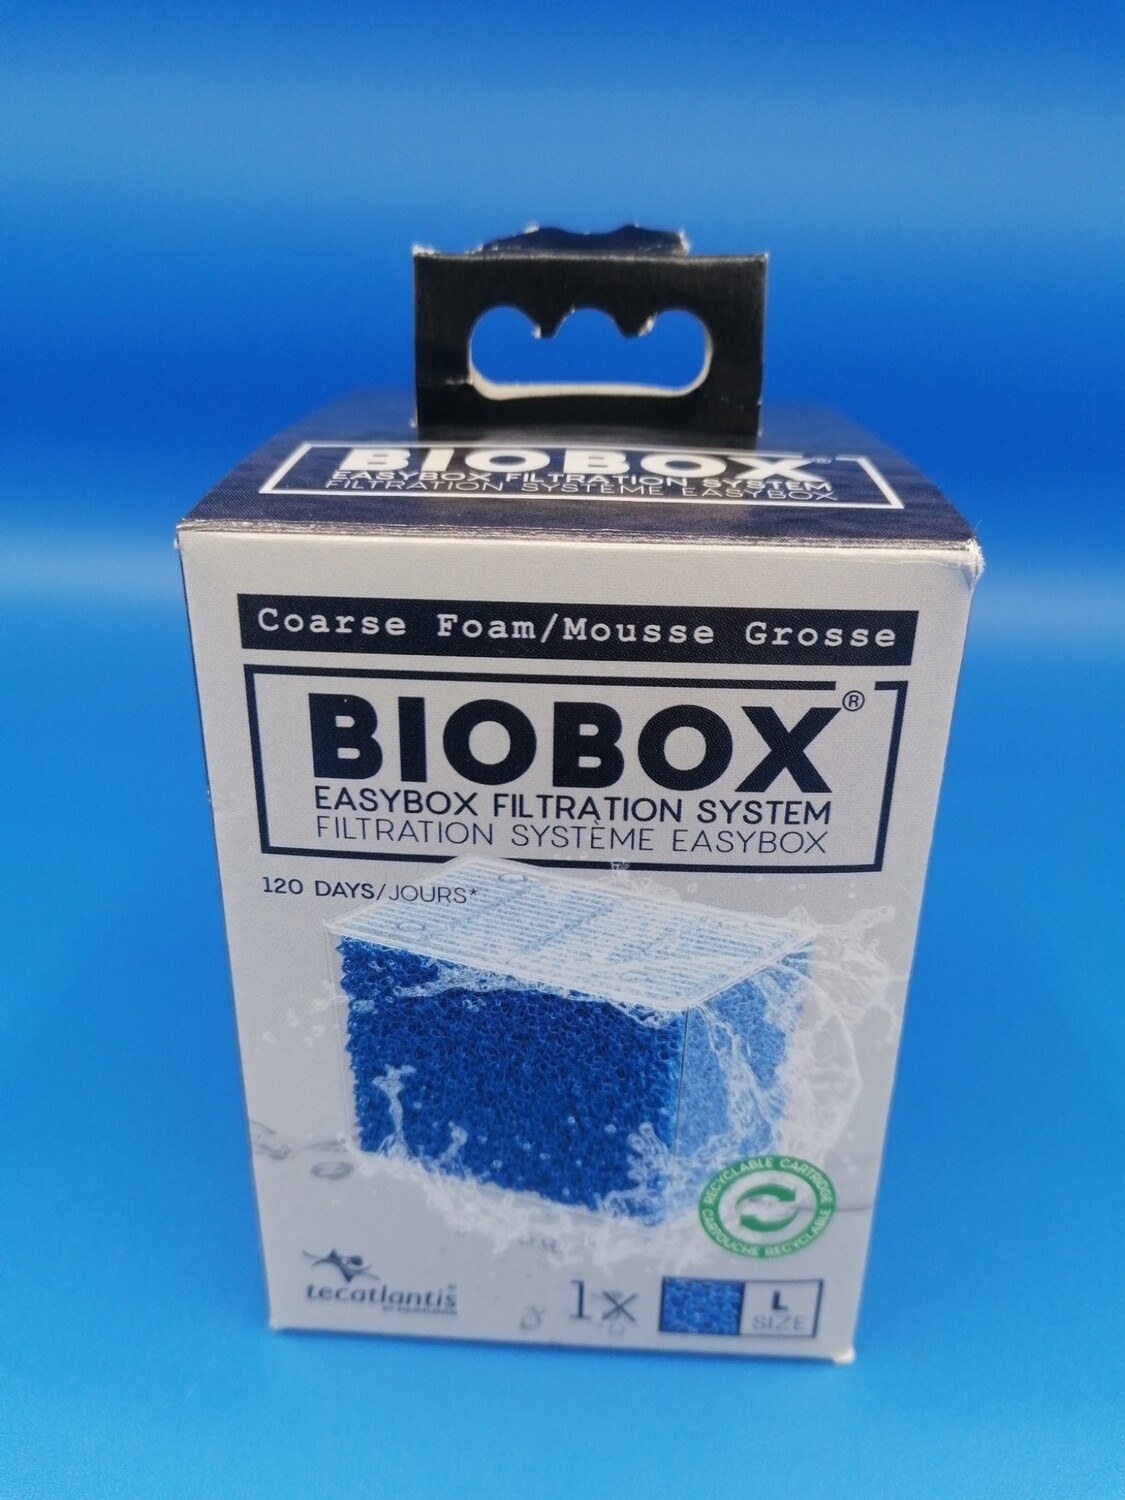 Biobox filtration mousse grosse L